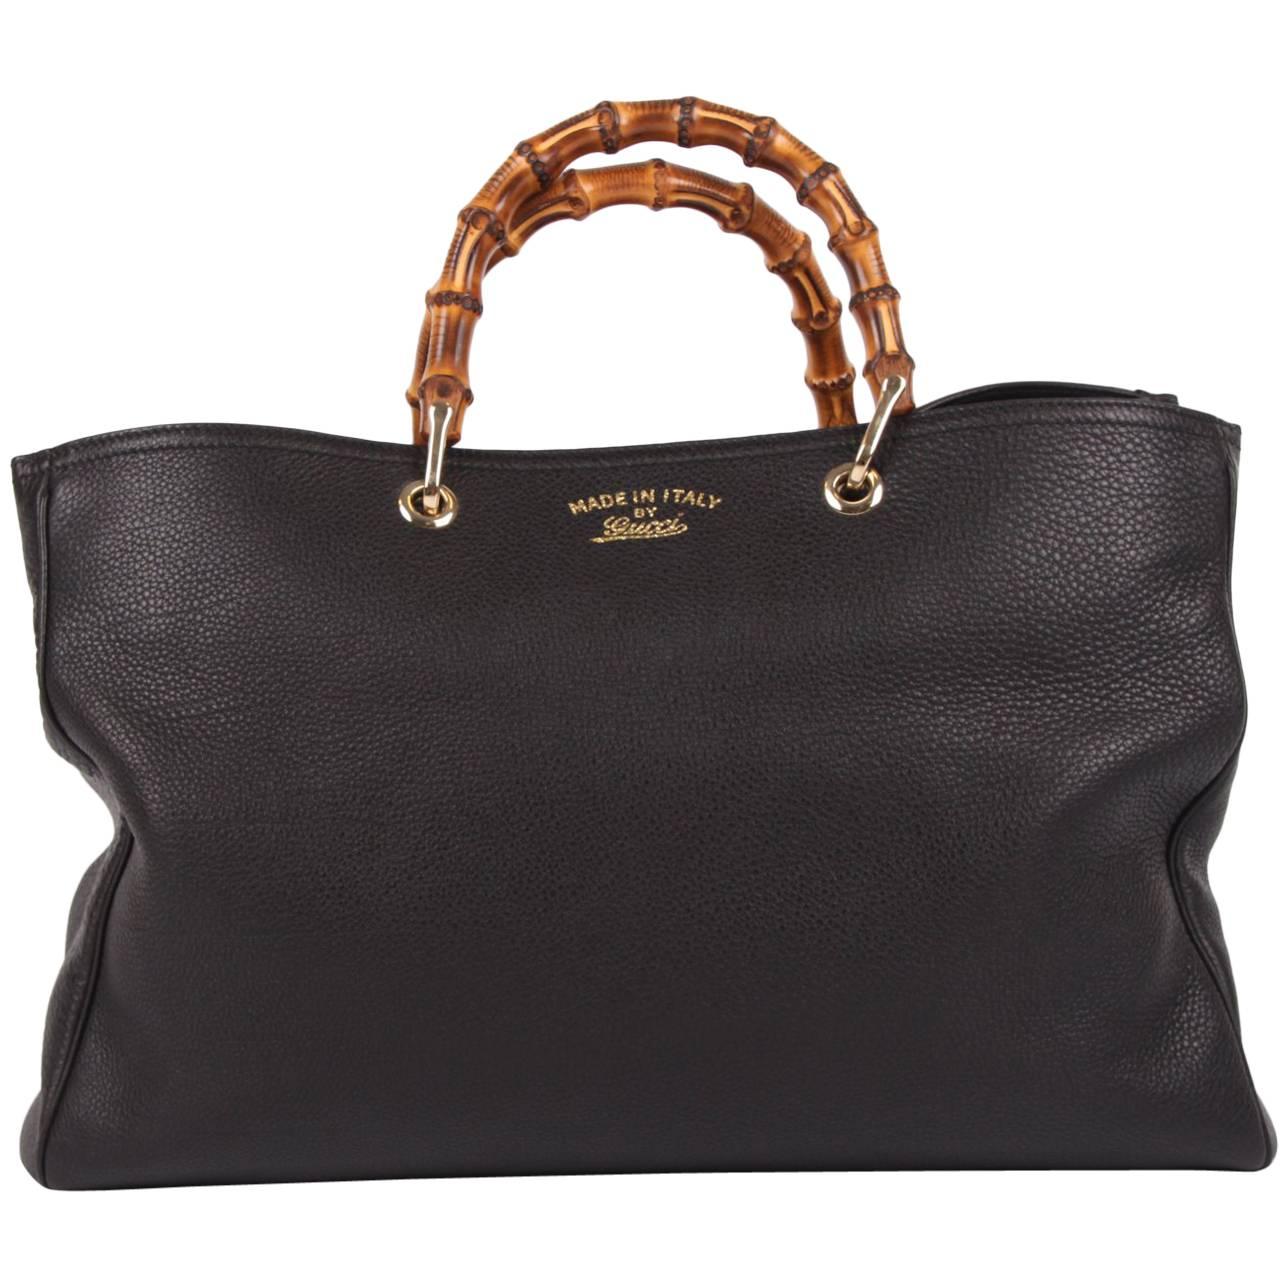 Gucci Bamboo Shopper Tote Bag L - black leather 